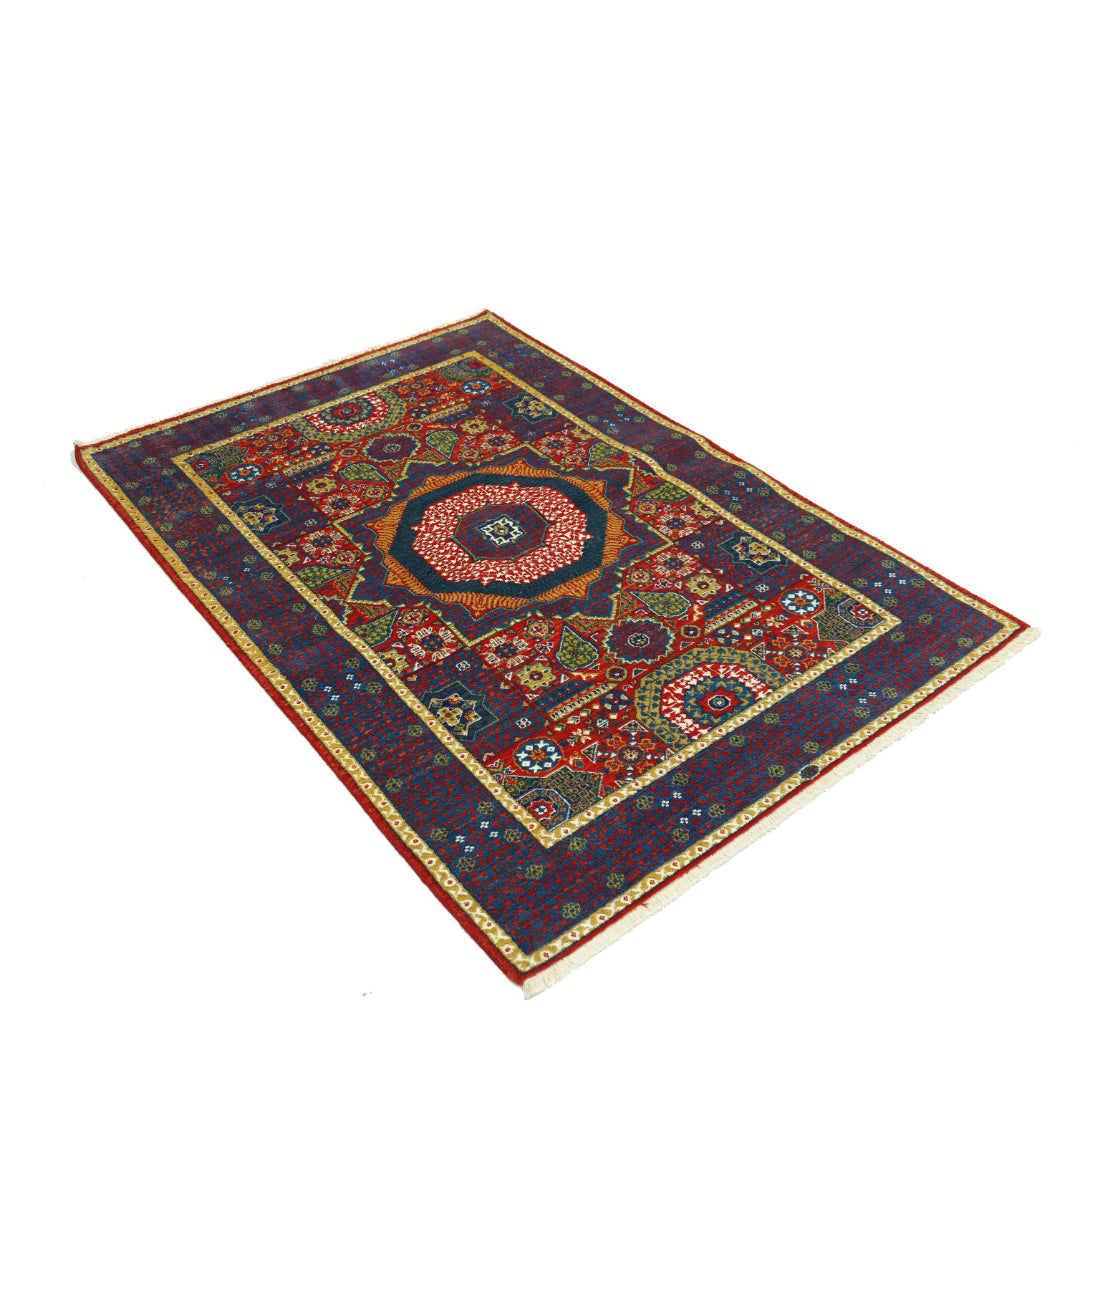 Gulshan Wool & Bamboo Silk Rug - 4'0'' x 5'10'' 4'0'' x 5'10'' (120 X 175) / Red / Blue